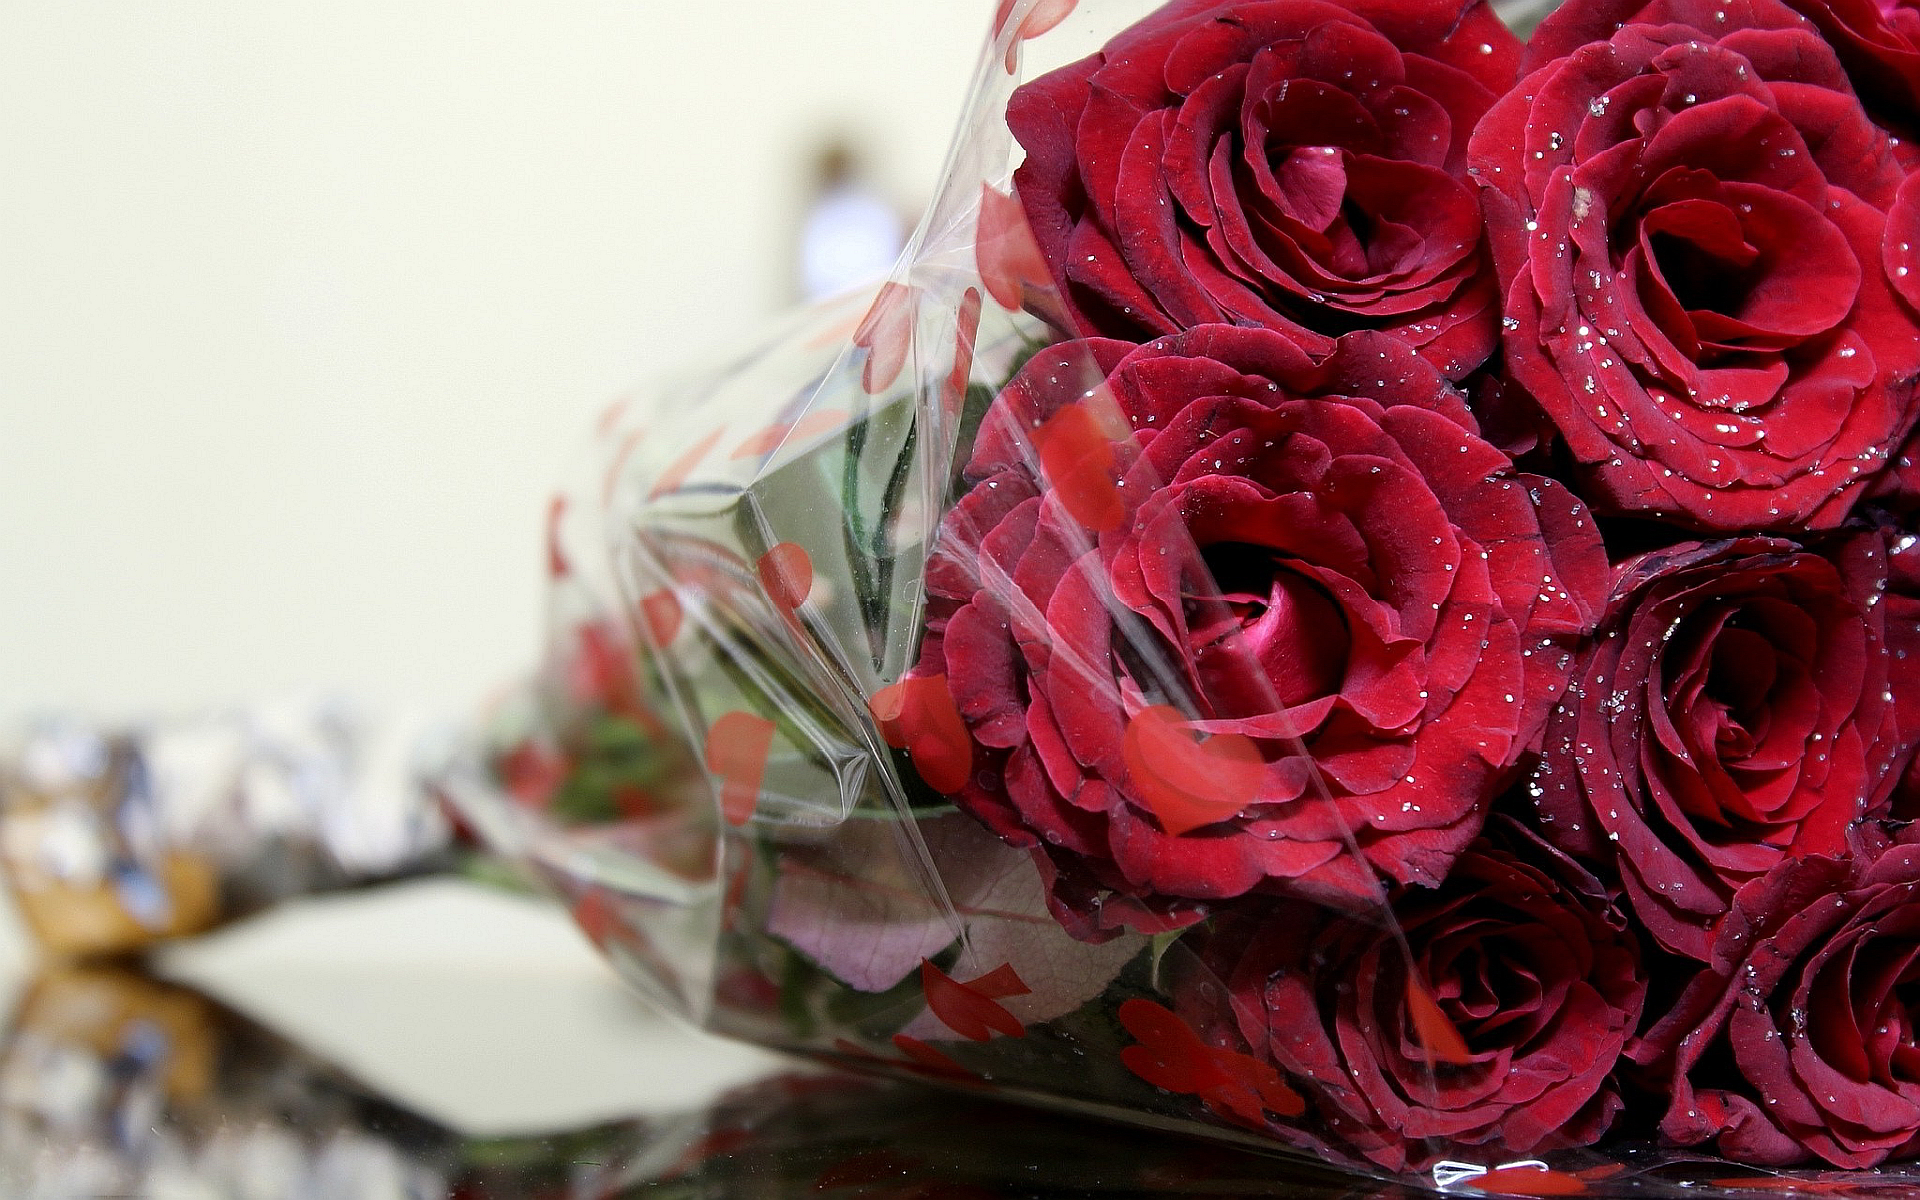 http://hddesktopwallpapers.in/wp-content/uploads/2015/08/roses-romantic-love.jpg